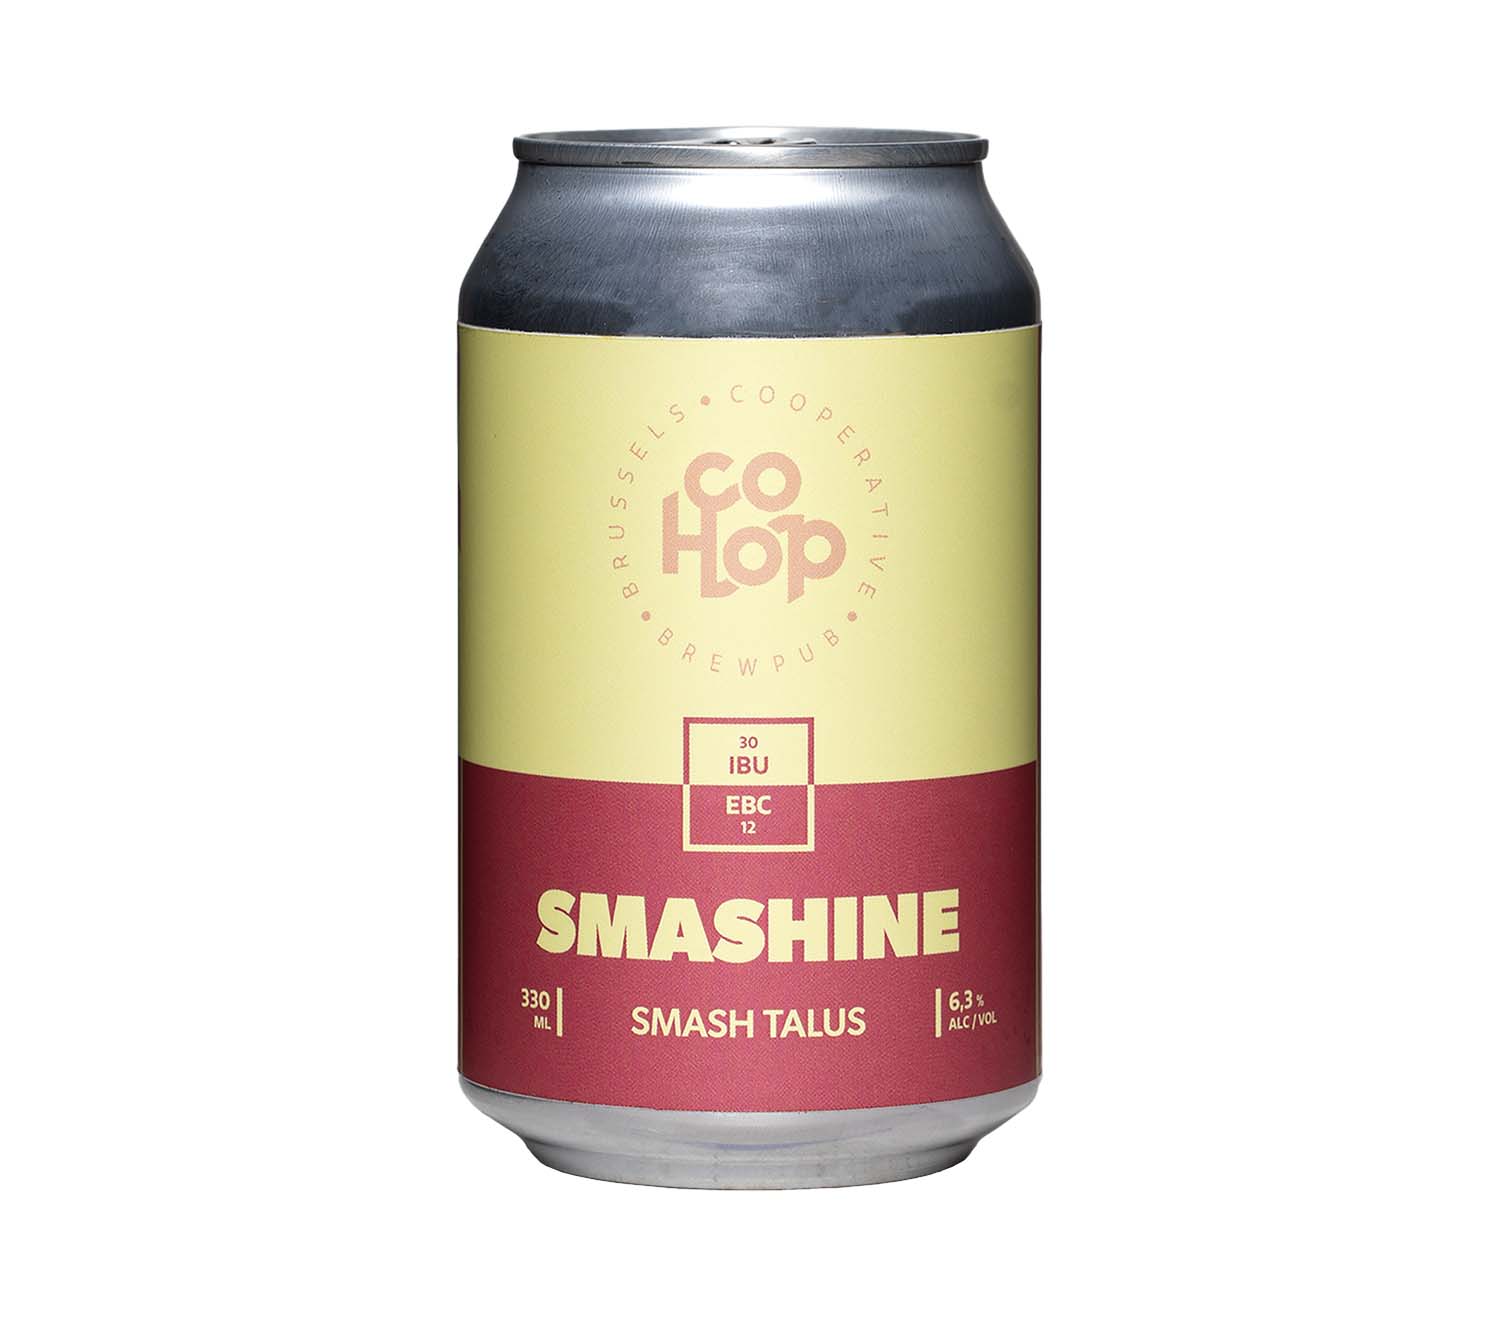 Smashine - CoHop-brouwerij 